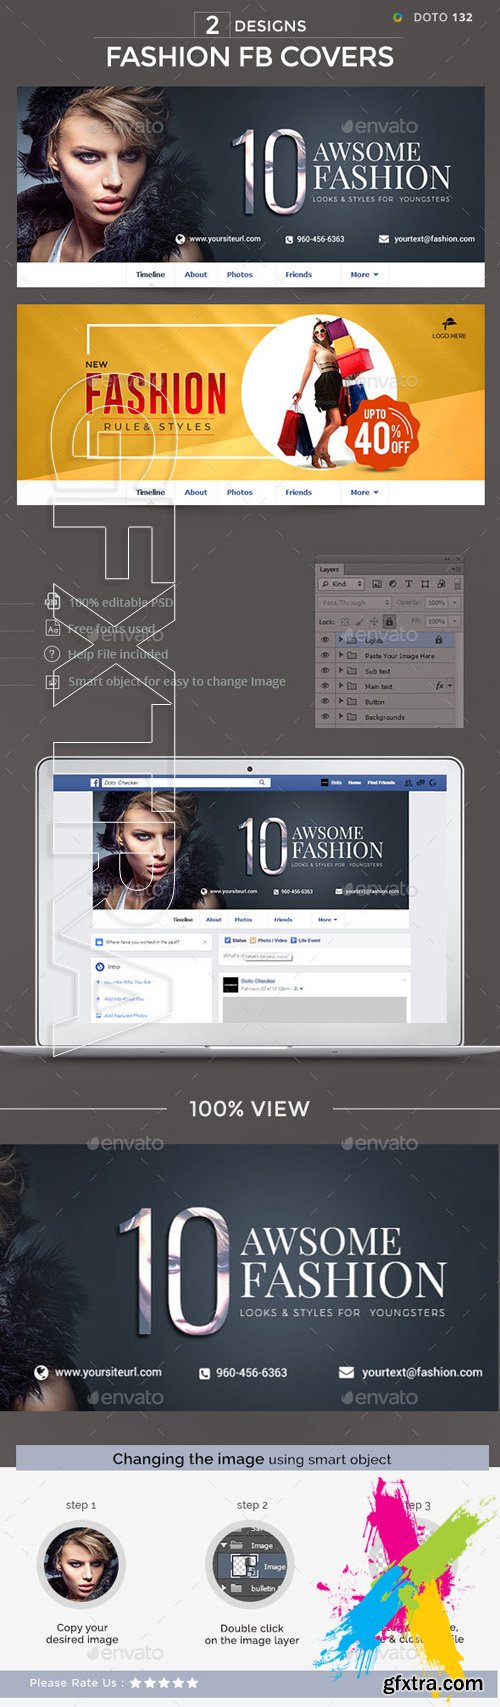 Graphicriver - Fashion Facebook Covers - 2 Designs 20293562